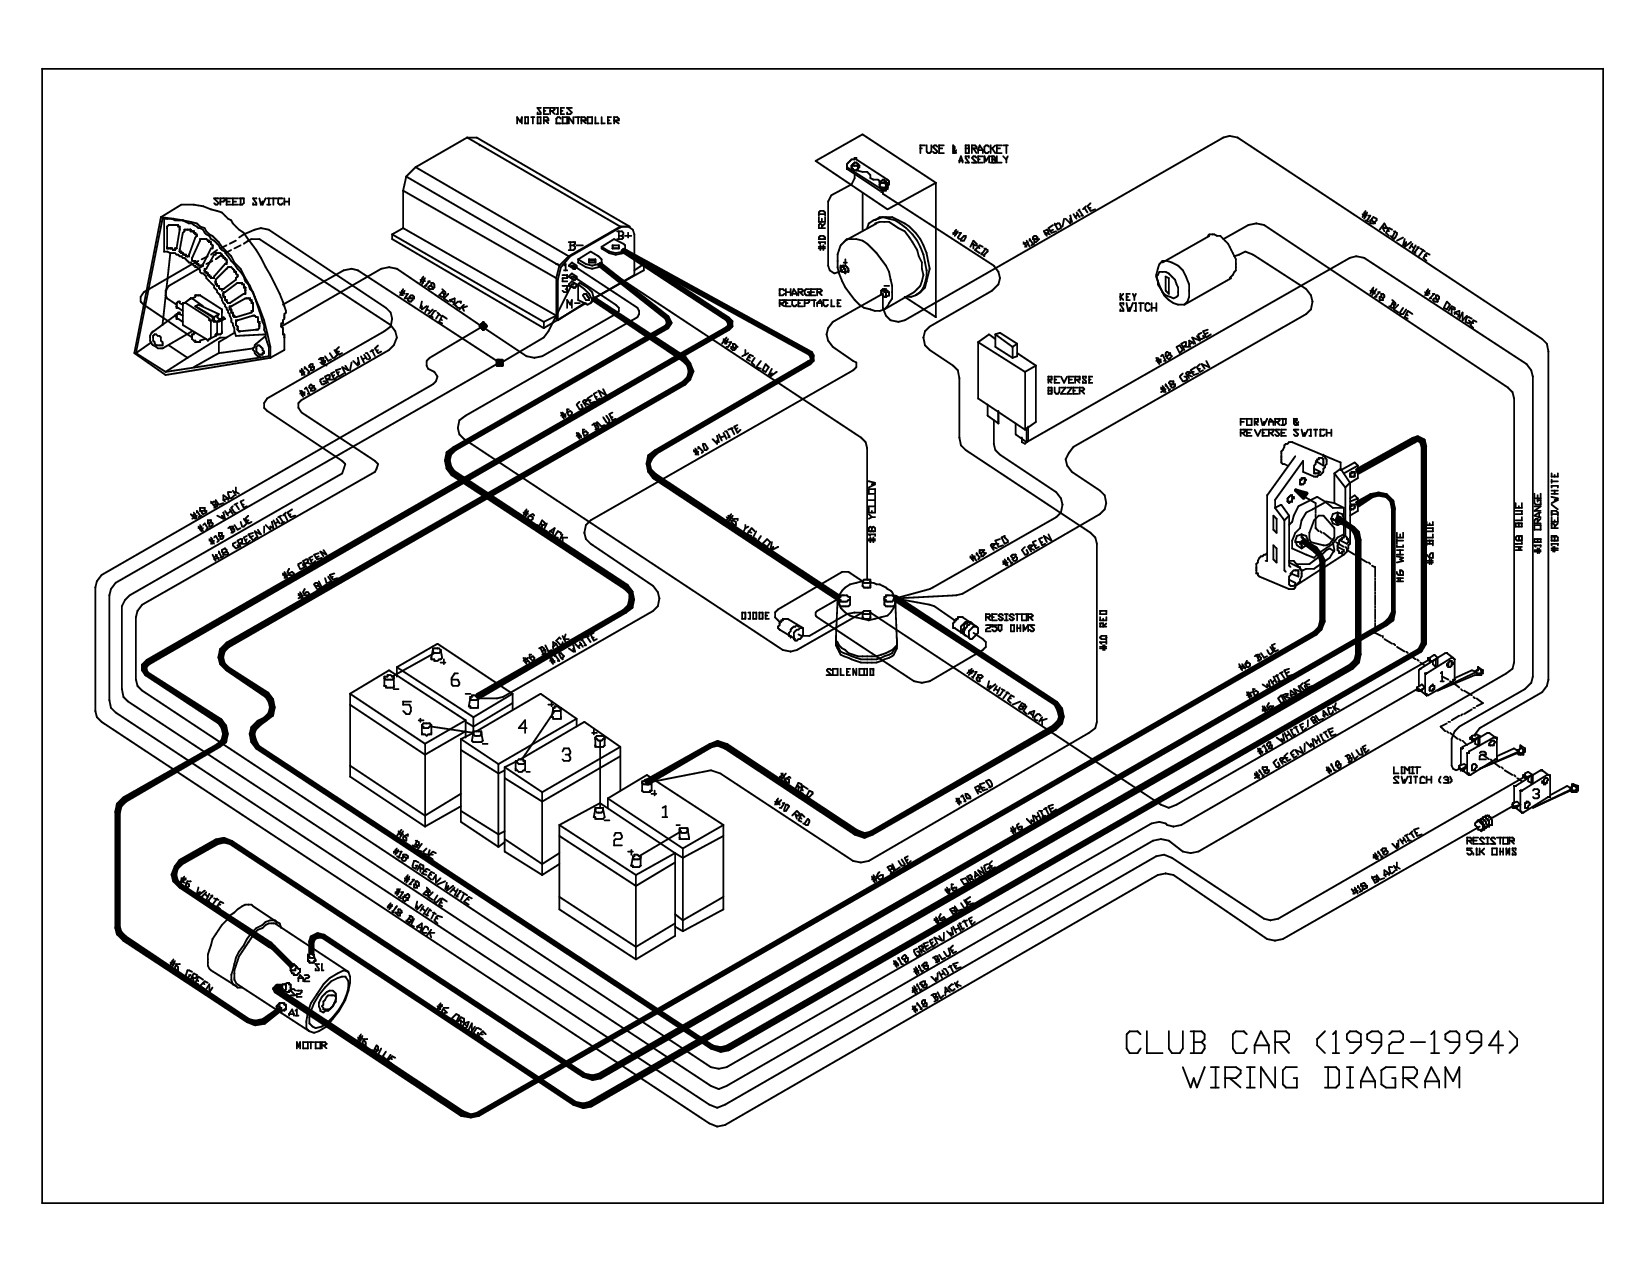 Club Car Wiring Diagram 48 Volt 1995 Club Car 48 Volt Wiring Diagram Of Club Car Wiring Diagram 48 Volt